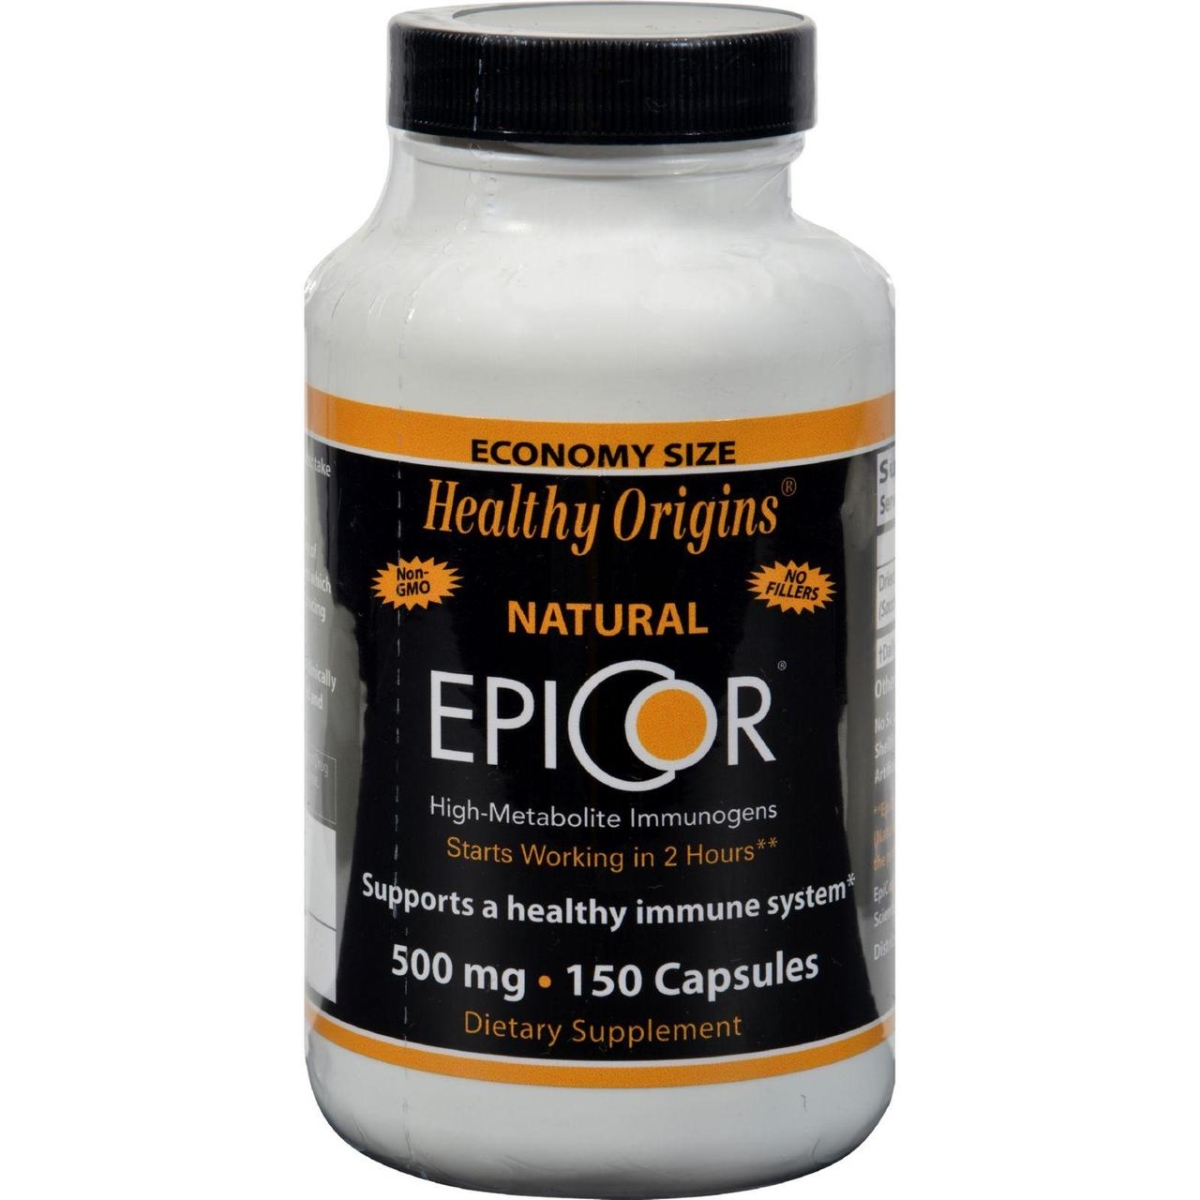 Hg0217422 500 Mg Epicor, 150 Capsules